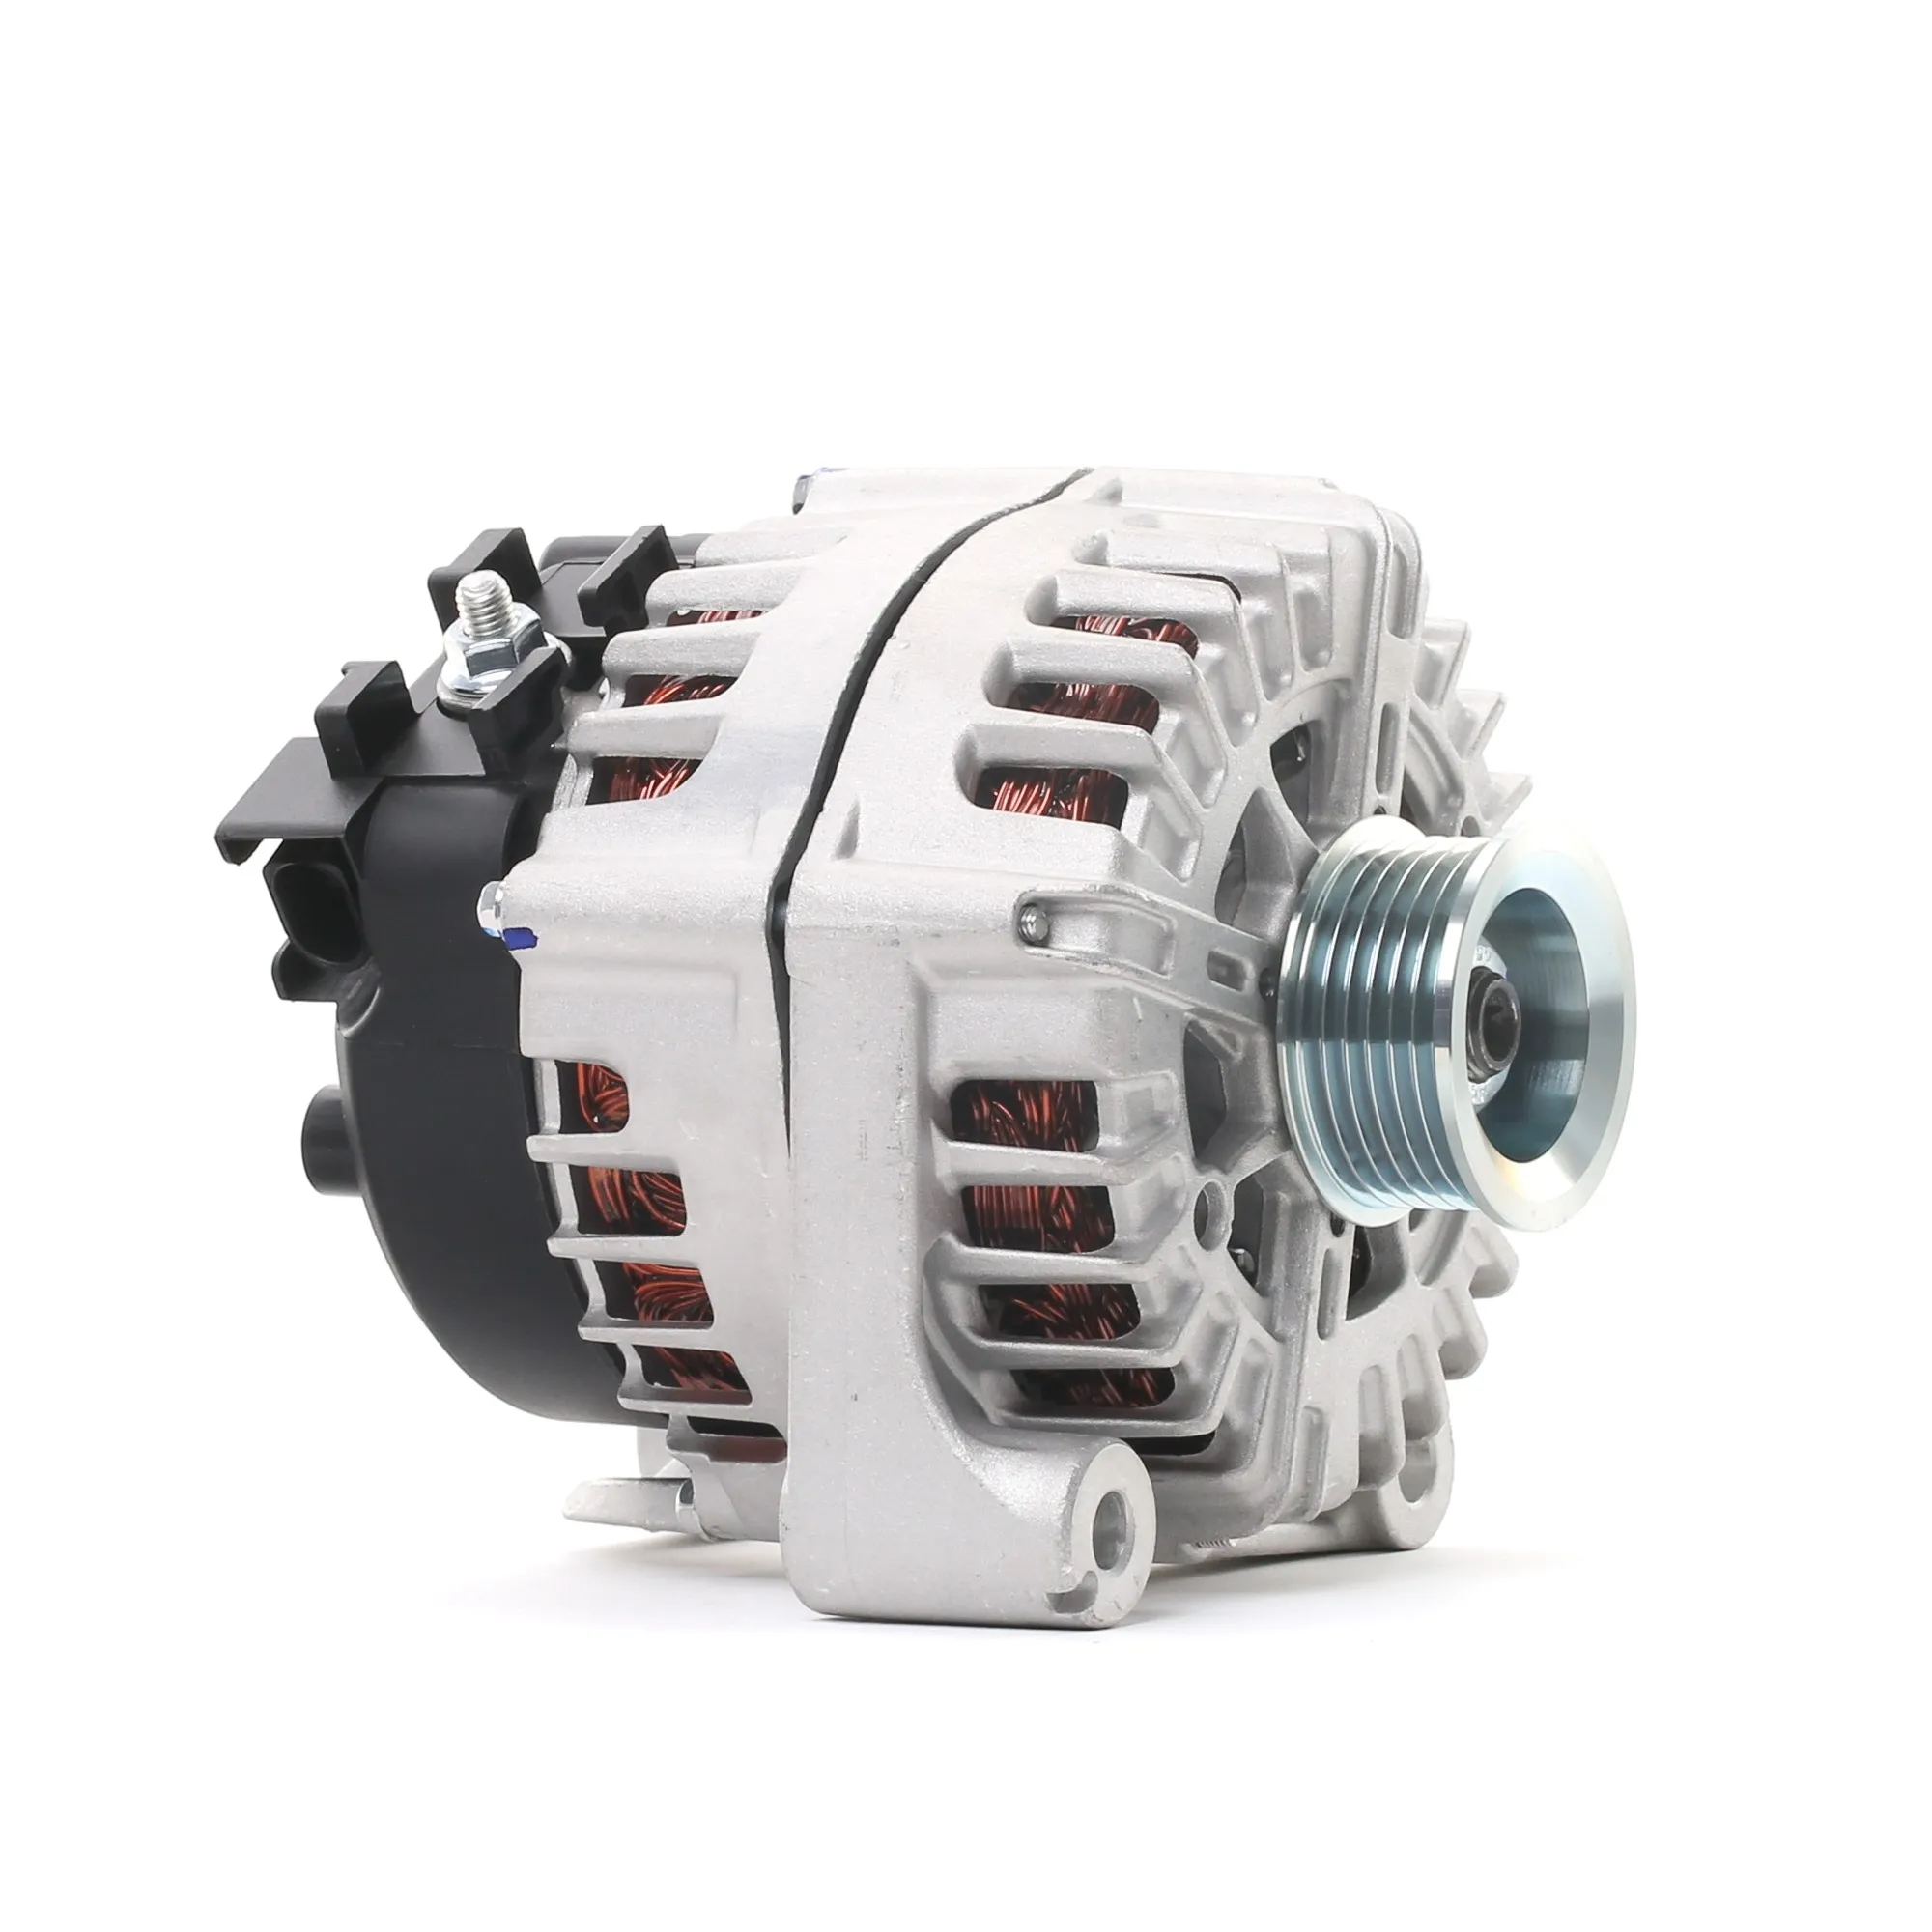 RIDEX Generator BMW 4G1219 12317802261,12317802619 Lichtmaschine,Dynamo,Lima,Altenartor